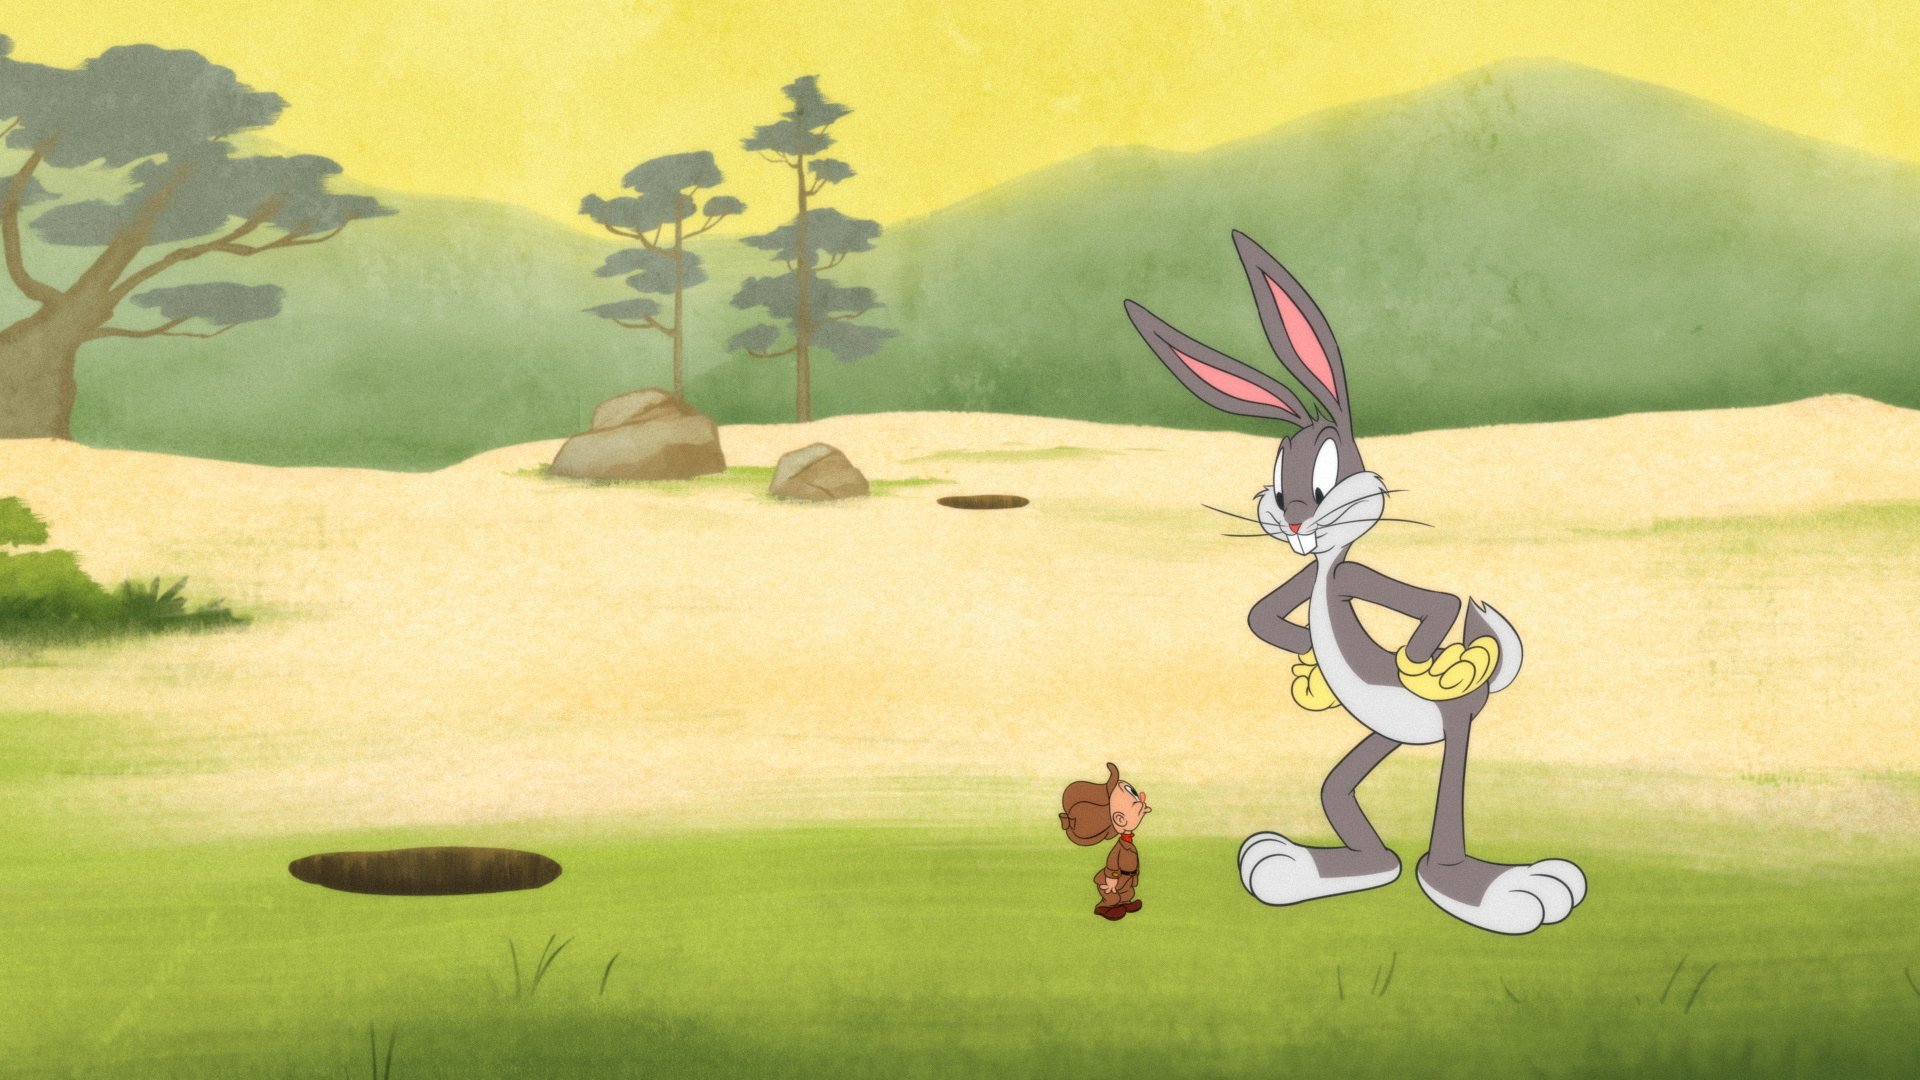 Bugs Bunny confronts a Mini Elmer Fudd in 'Looney Tunes Cartoons'